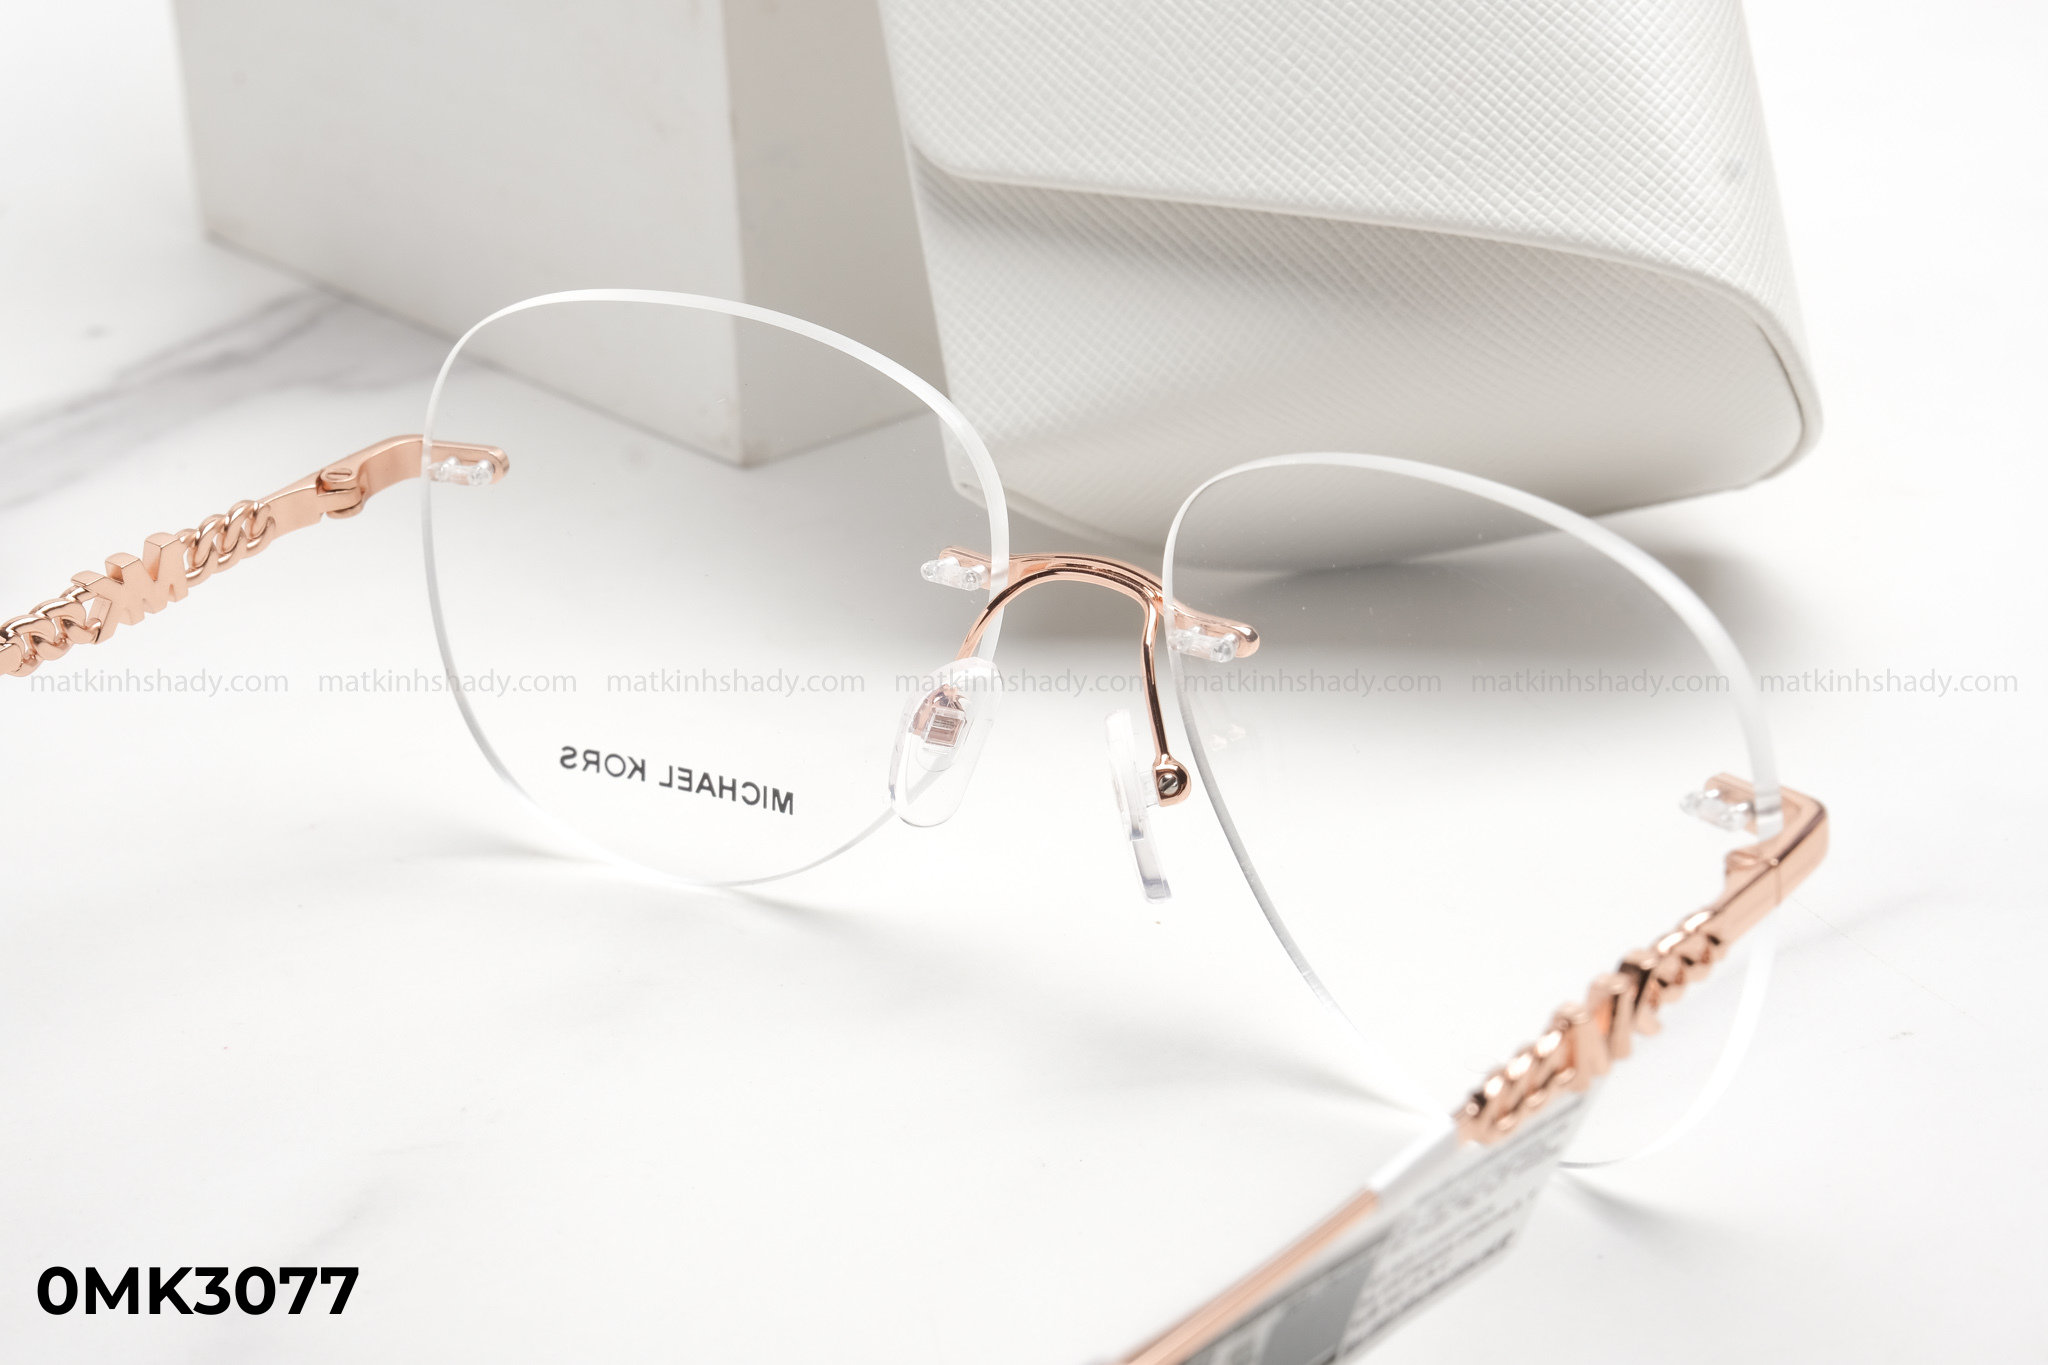  Michael Kors Eyewear - Glasses - 0MK3077 